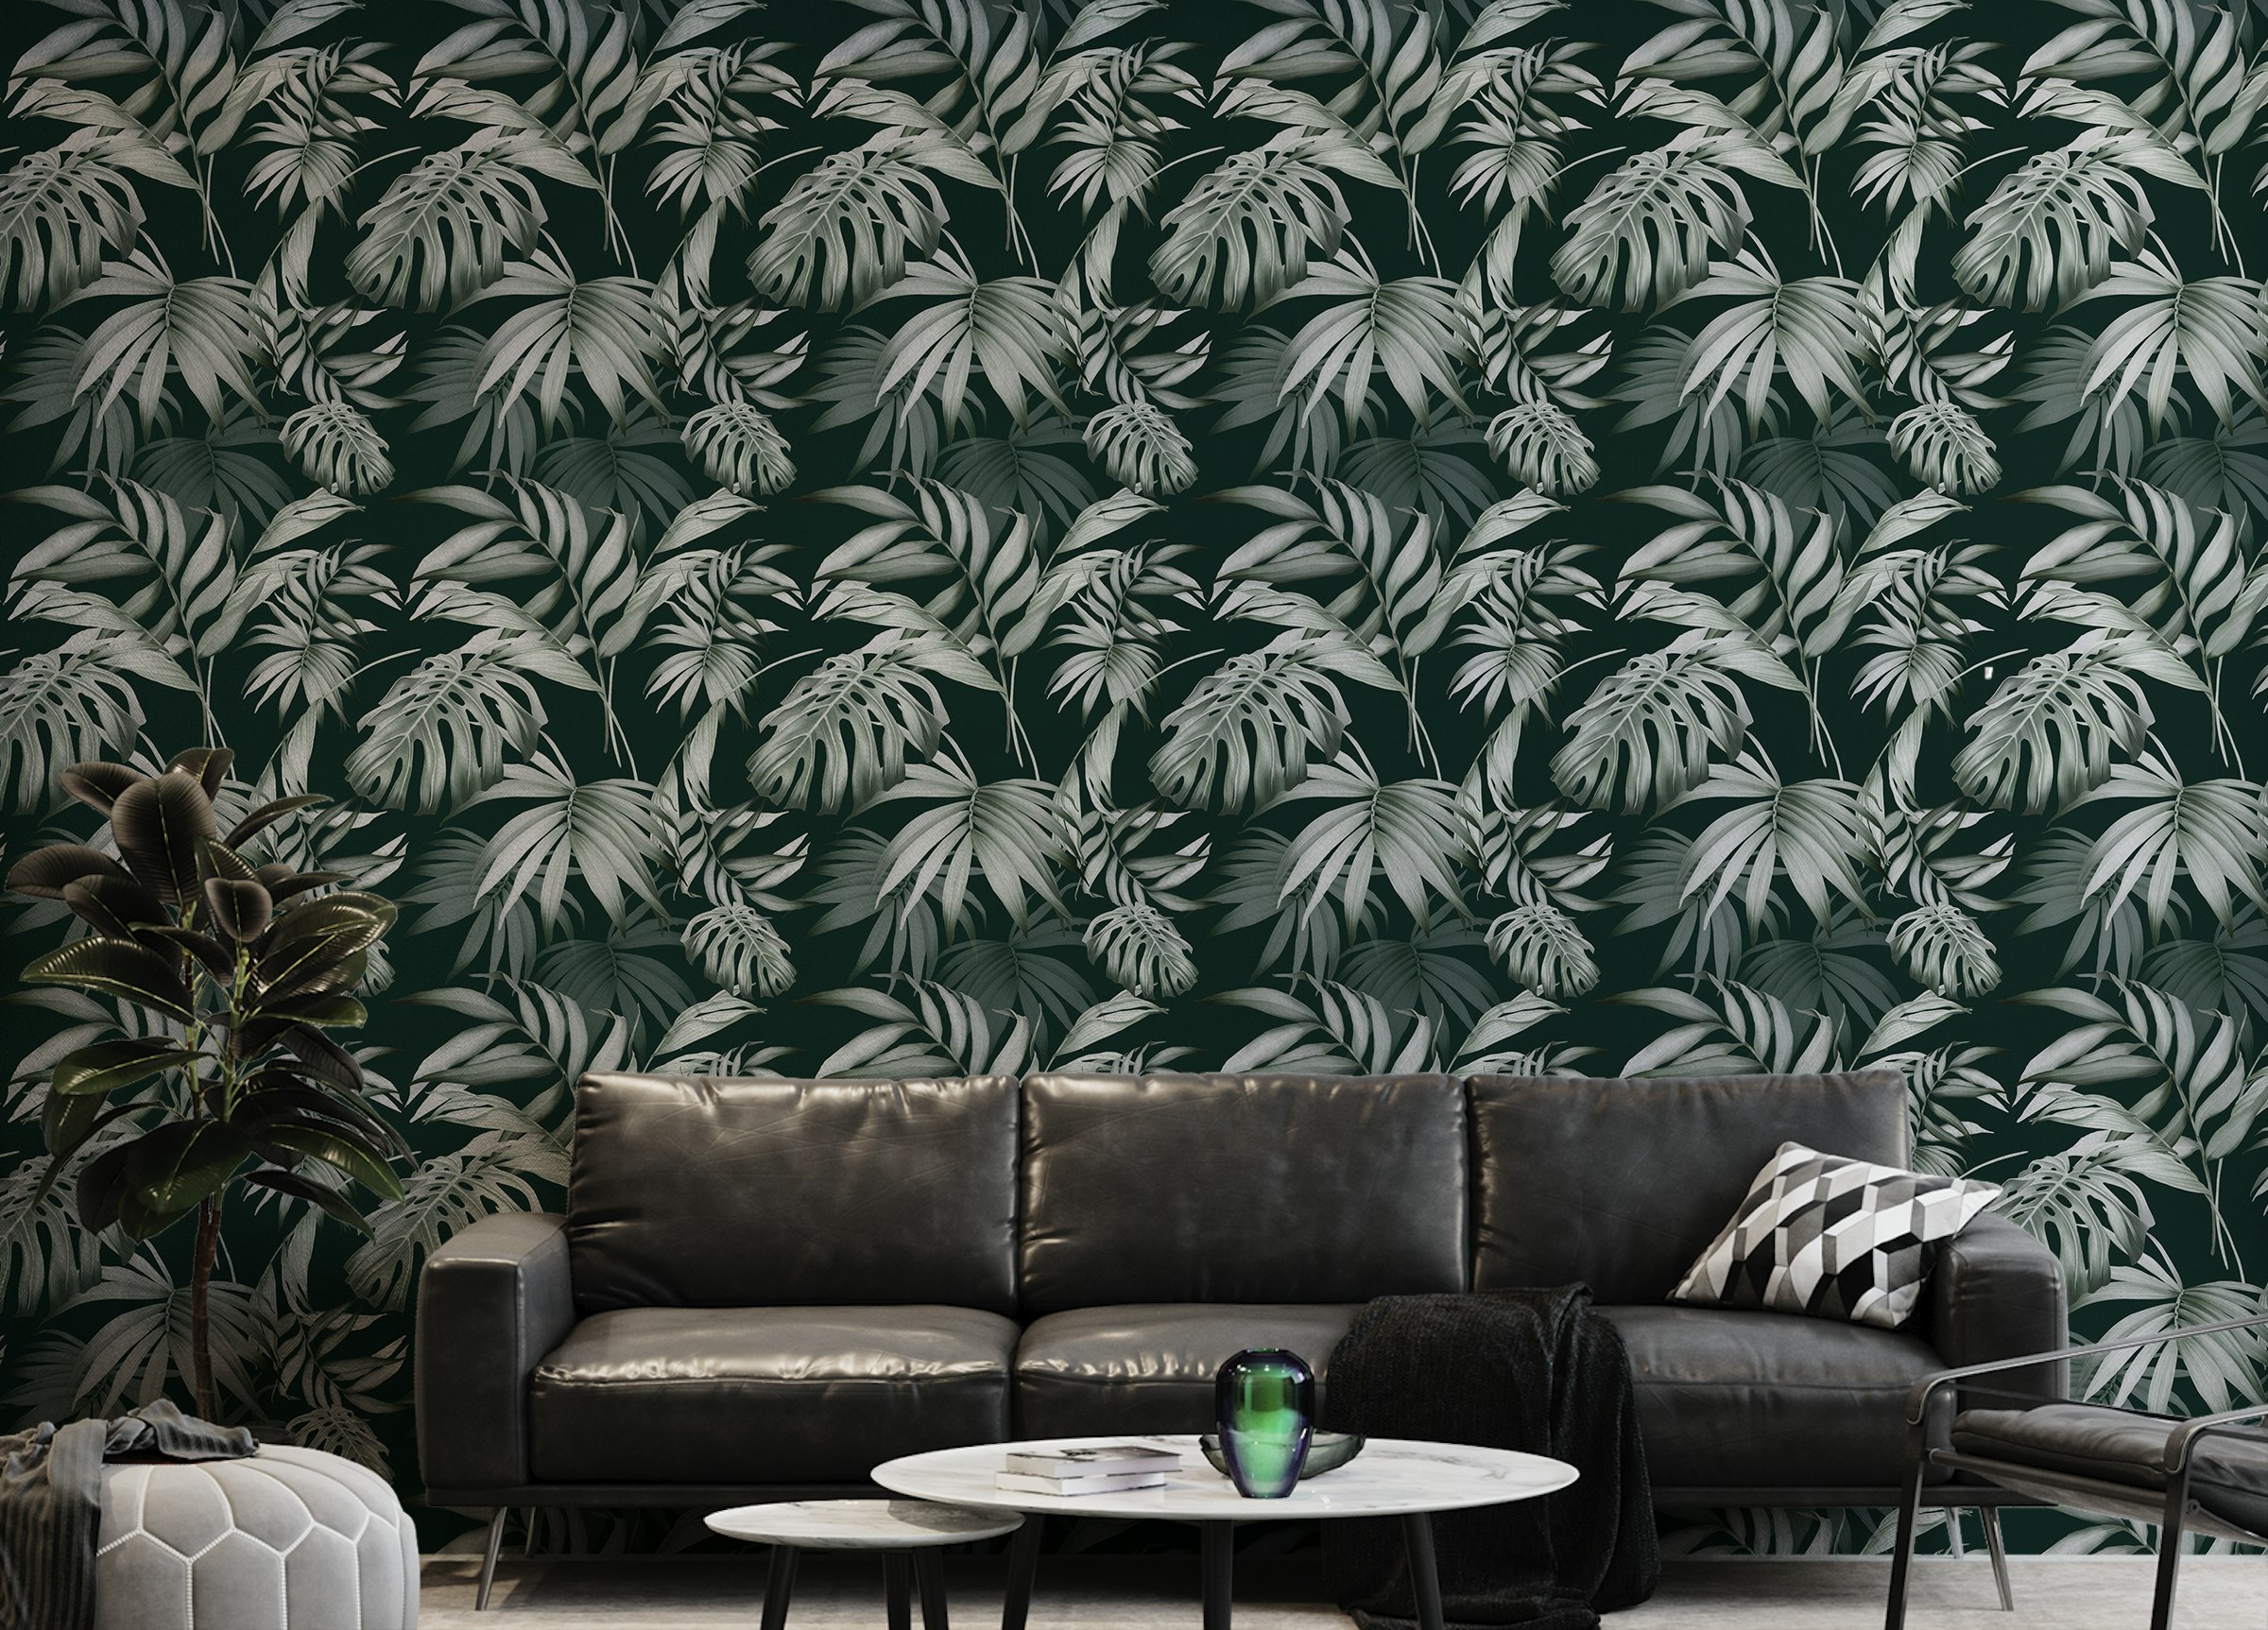 Custom made Exotic Jungle Tropical Green Leaves Repeat Wallpaper